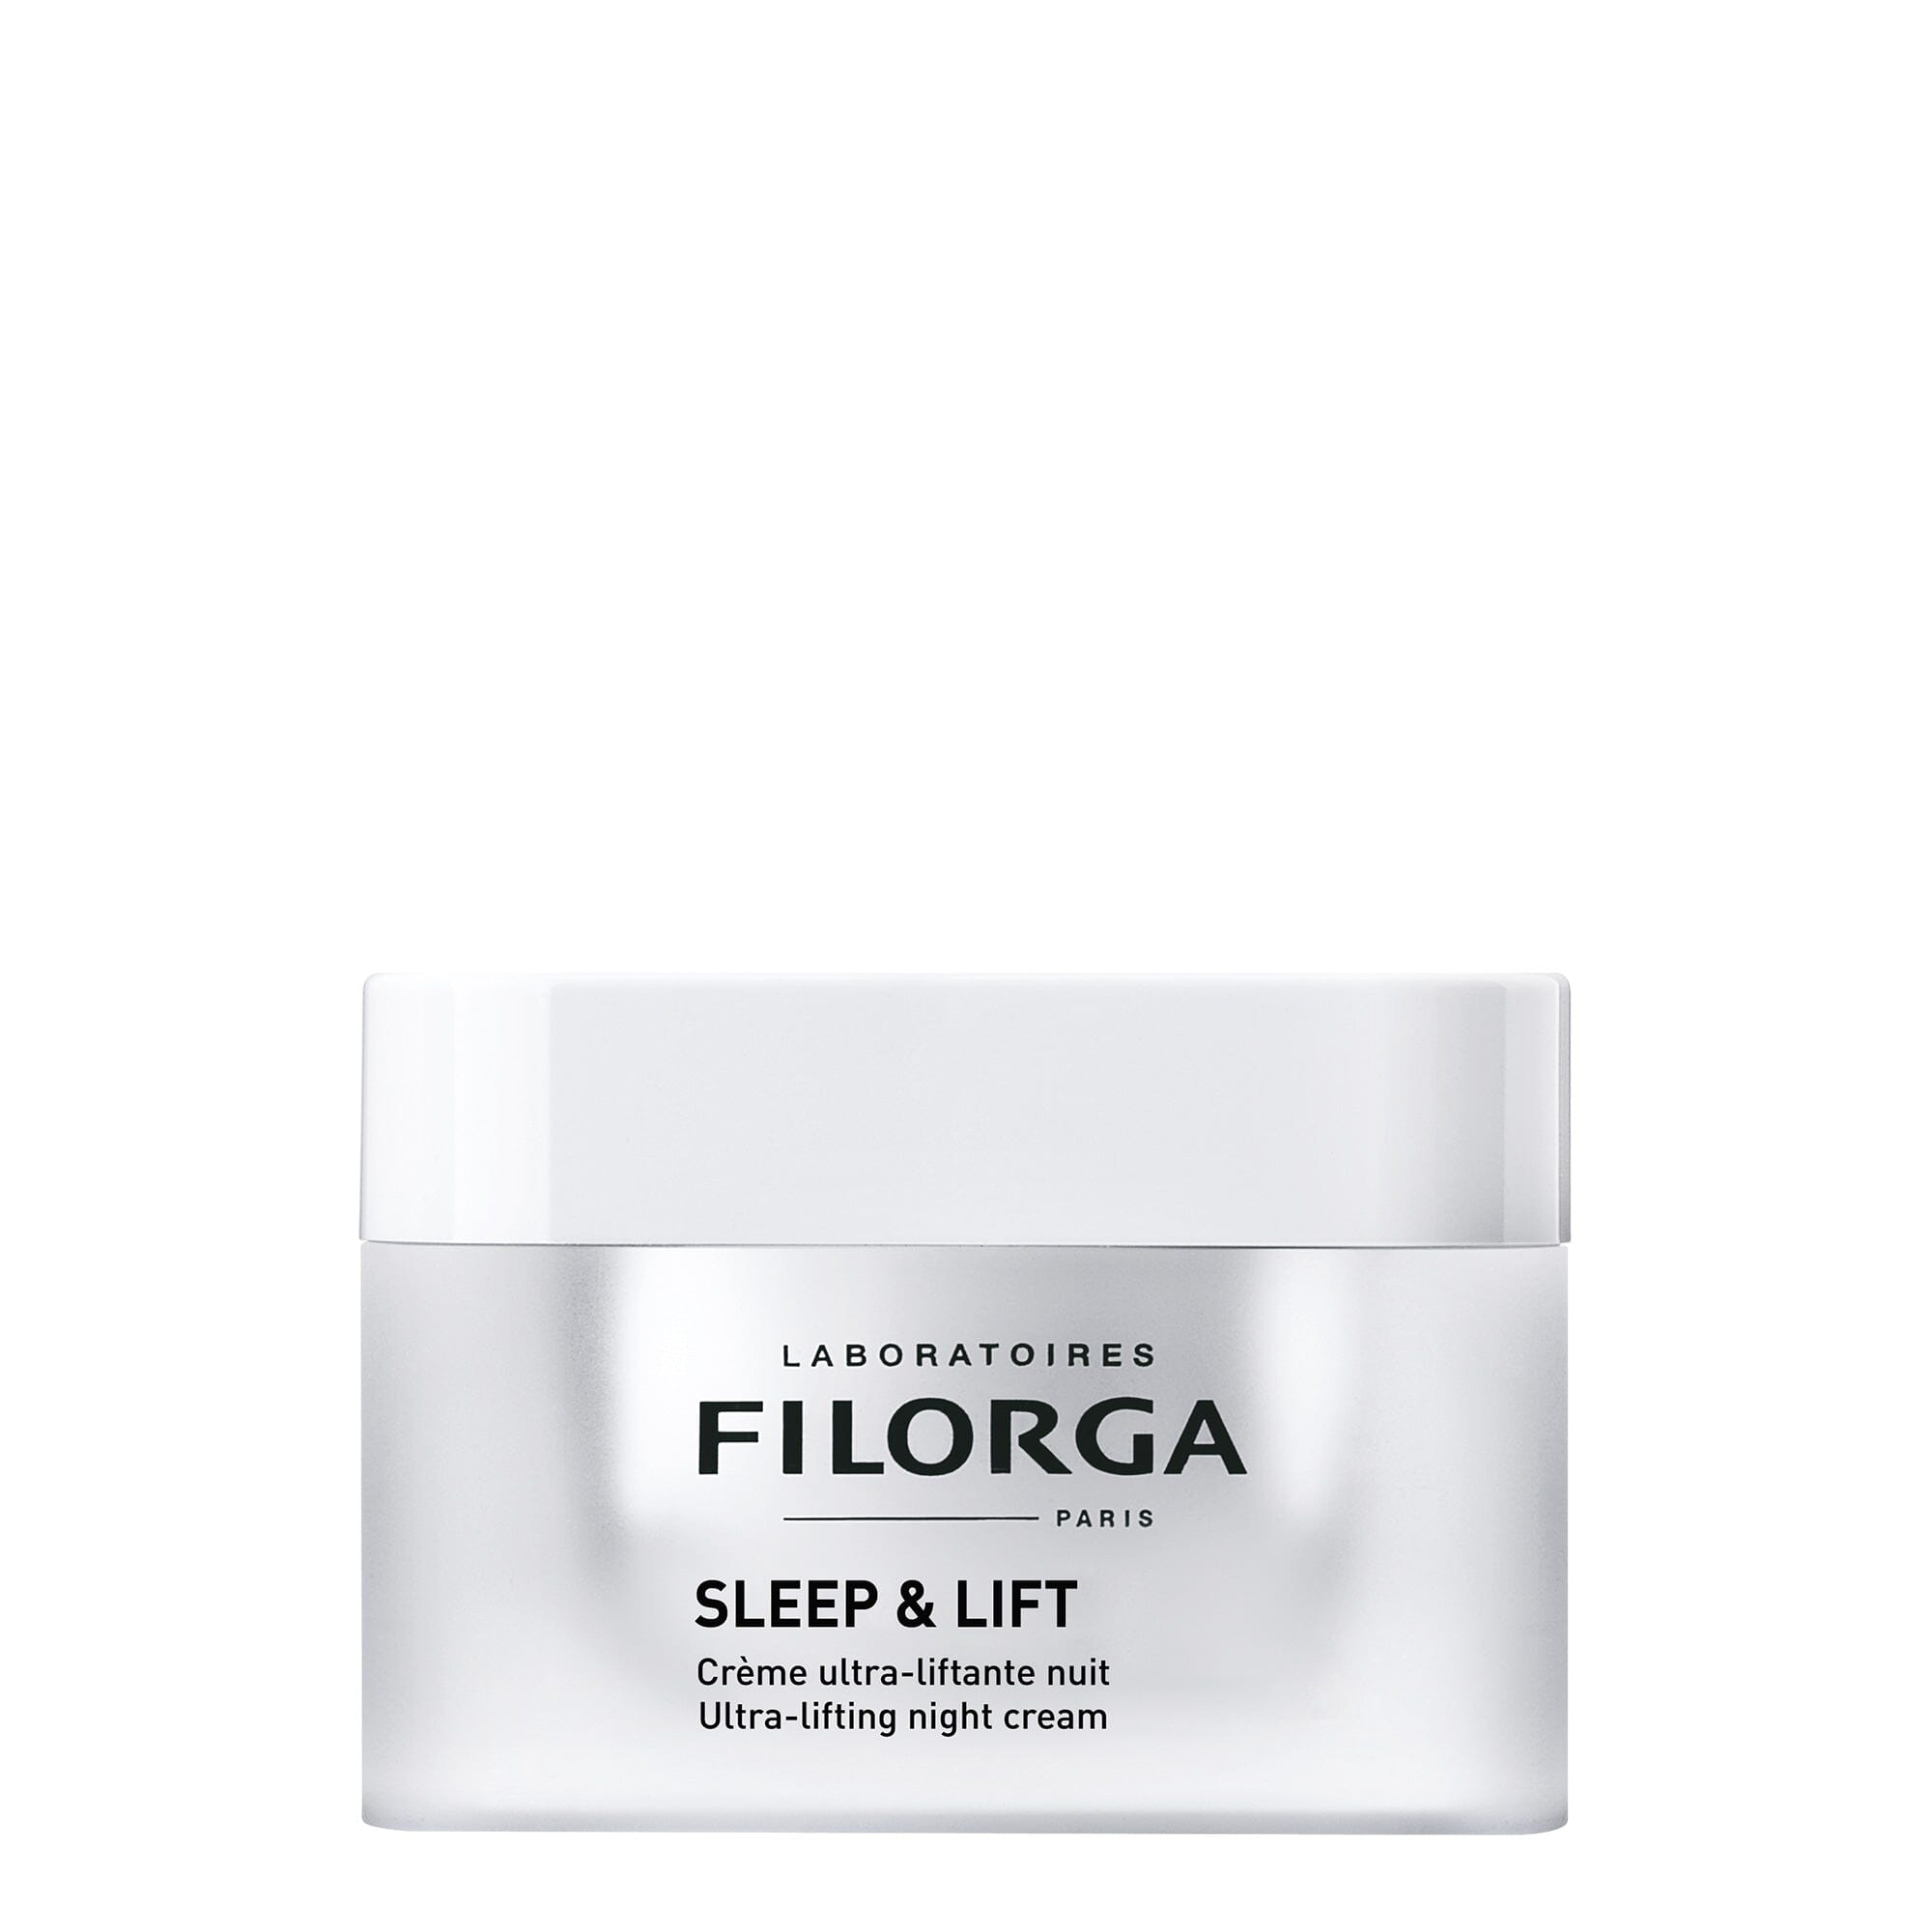 Filorga SLEEP & LIFT Ultra-Lifting Night Cream Filorga 1.69 oz. Shop at Exclusive Beauty Club